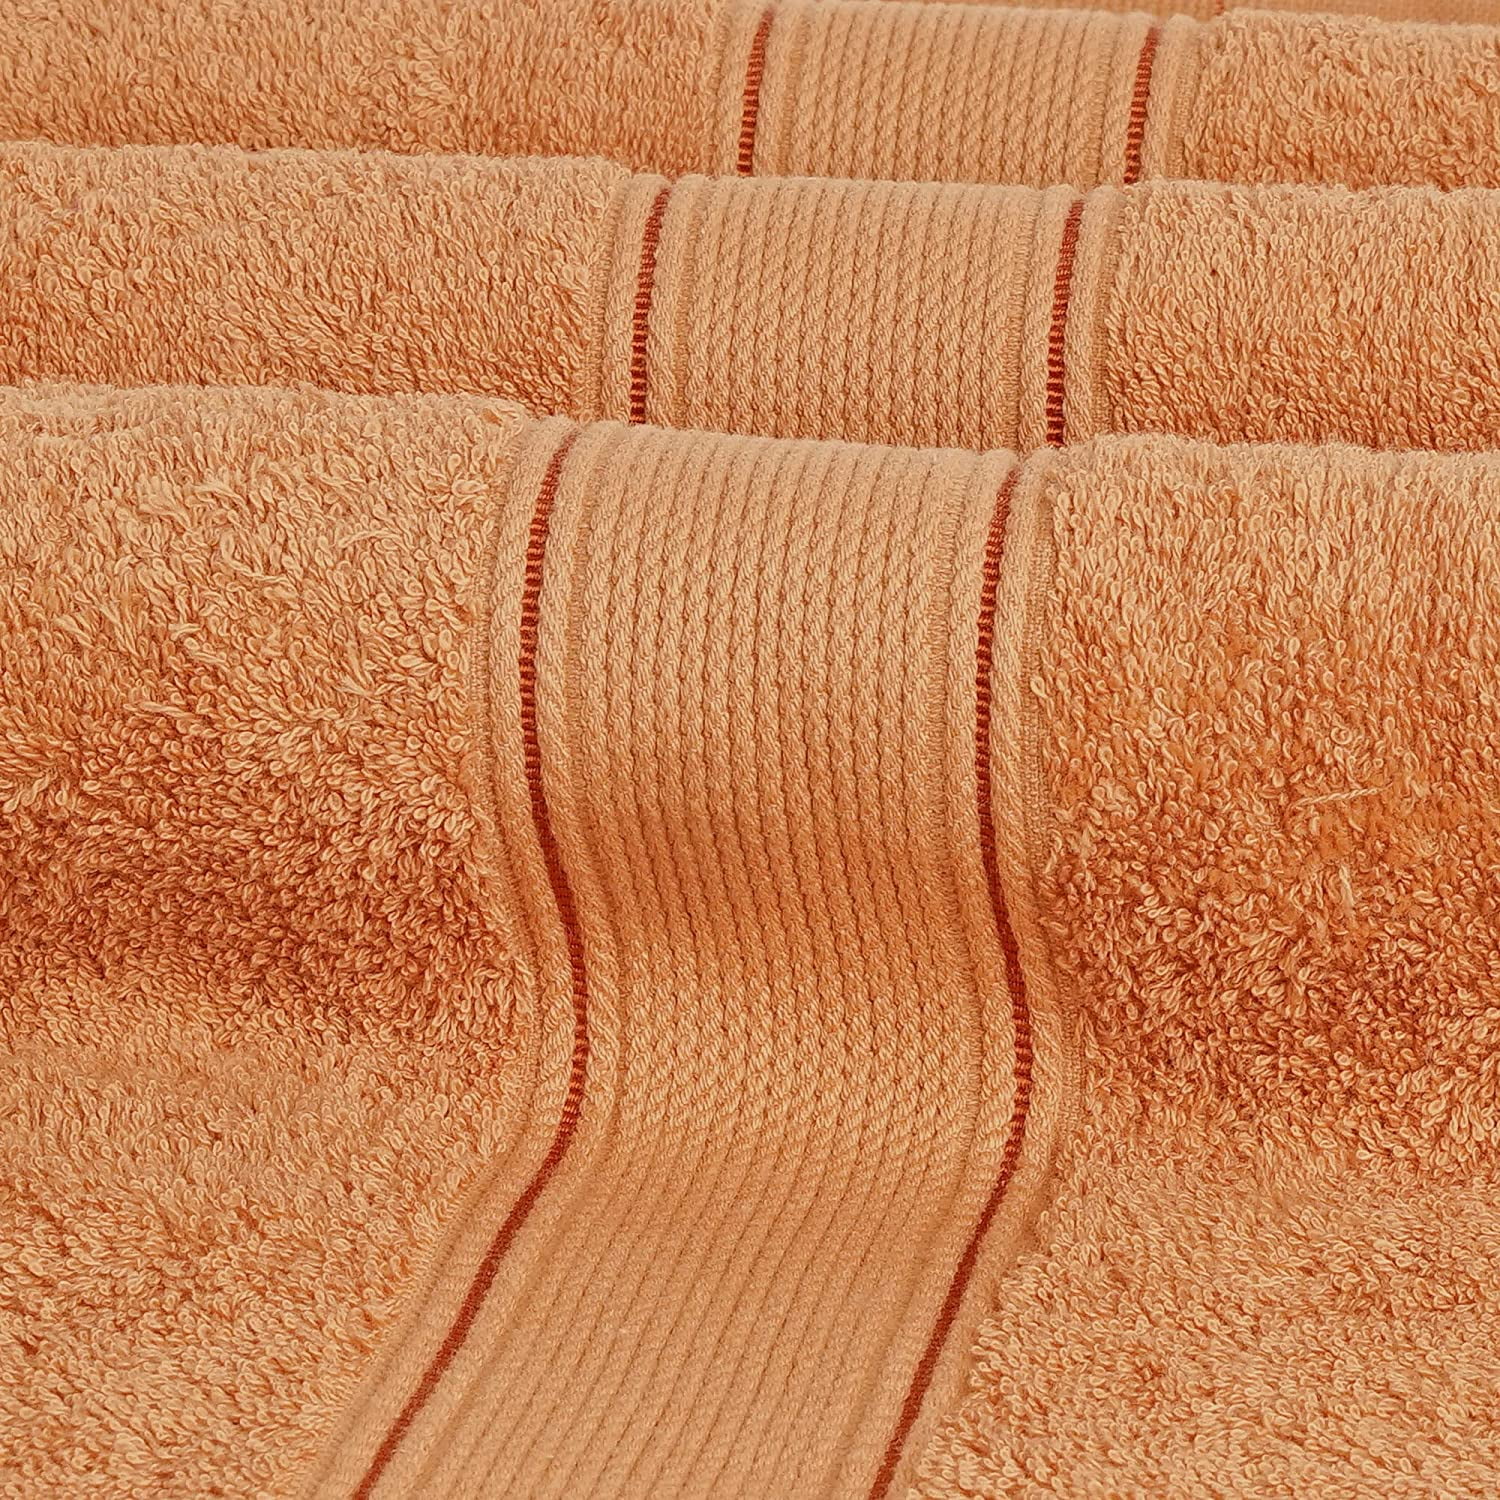 Tens Towels Brown 4 Piece XL Extra Large Bath Towels Set 30 x 60 inches  Premium Cotton Bathroom Towels Plush Quality 